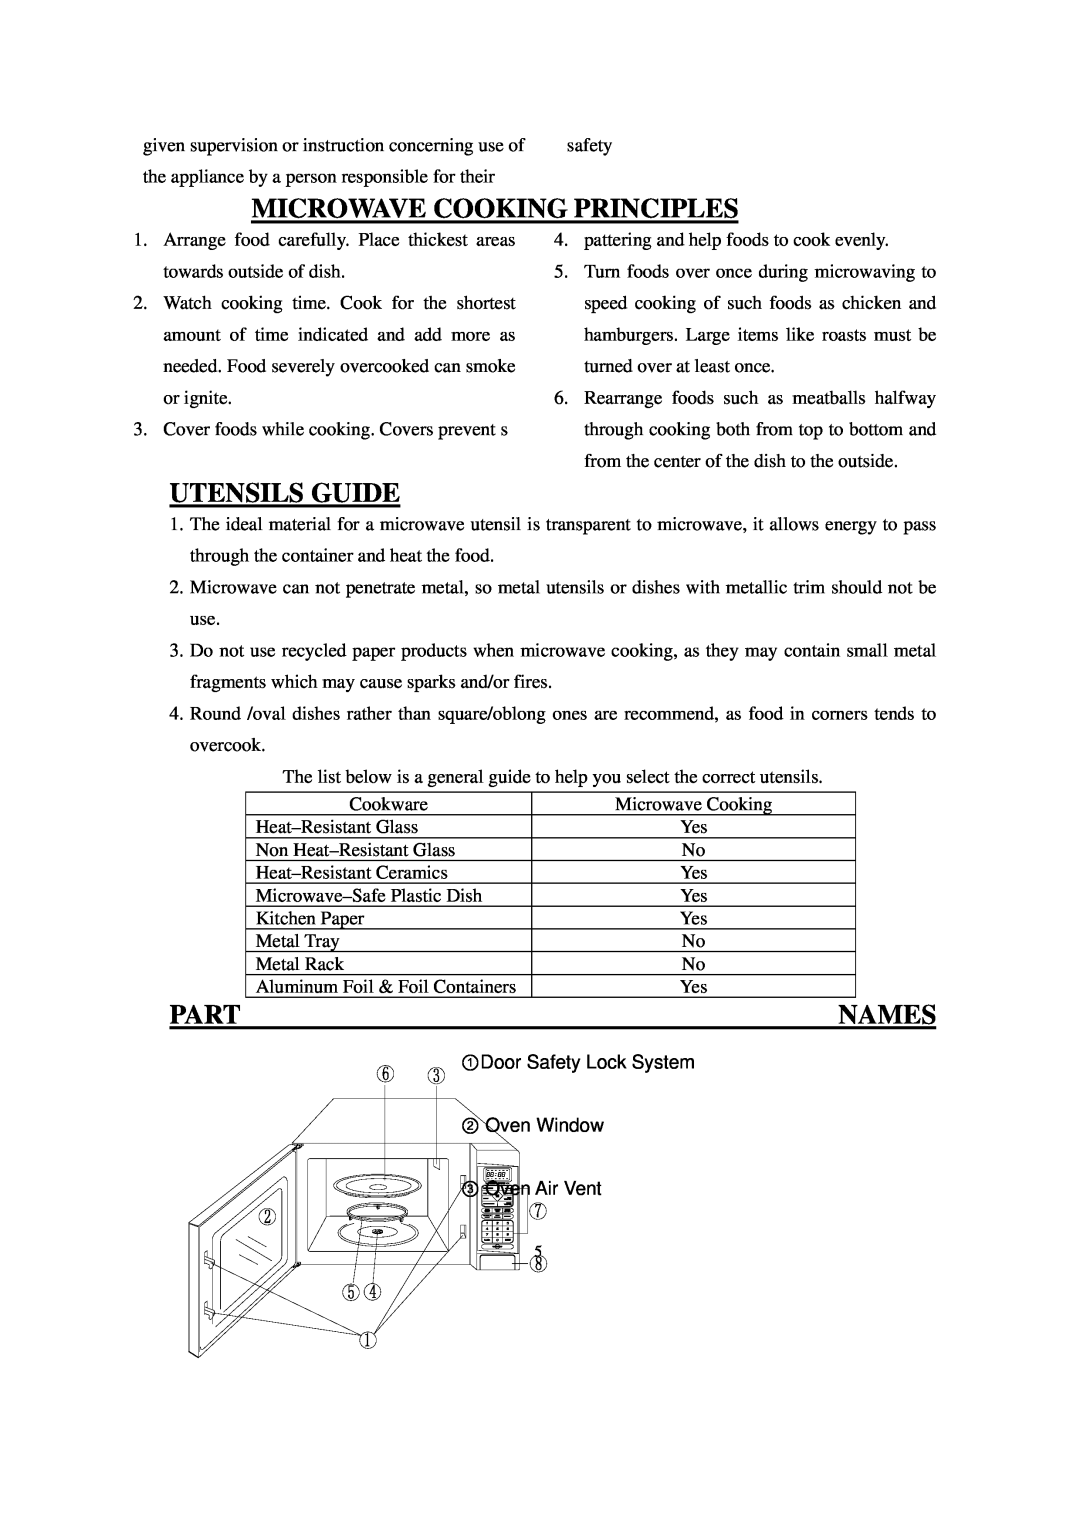 Sanyo EM-S8597W owner manual Microwave Cooking Principles, Utensils Guide, Part, Names 